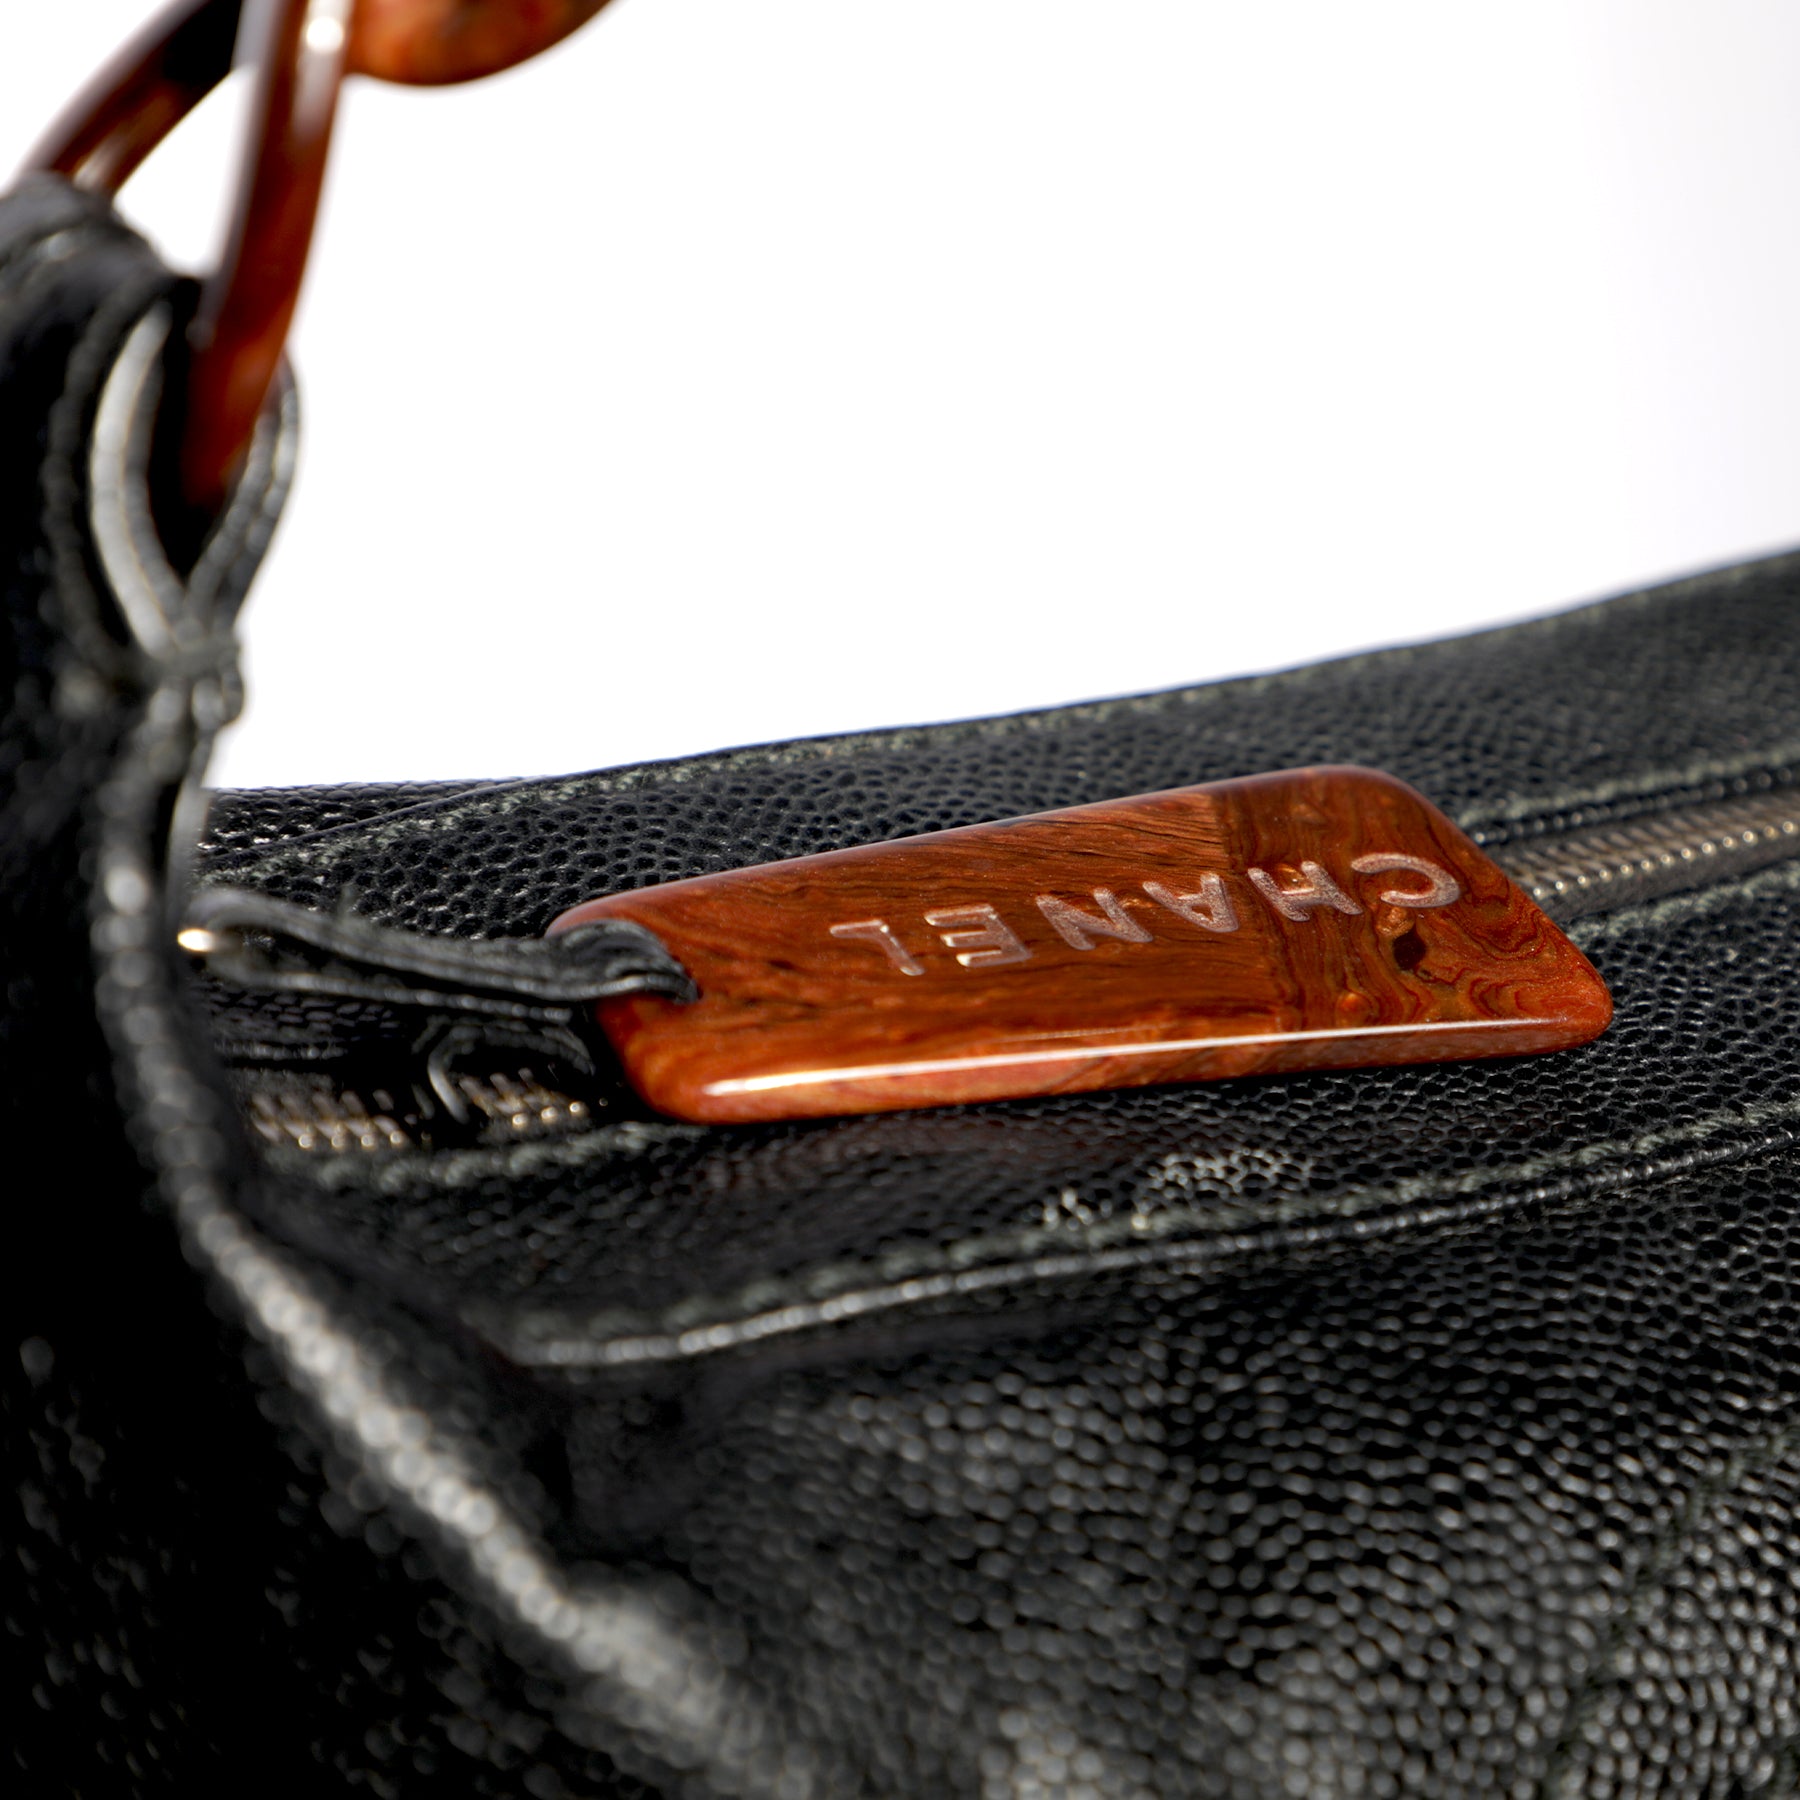 Y2K Chanel Brown Suede Leather Hobo Shoulder Bag w/ Tortoise Chain